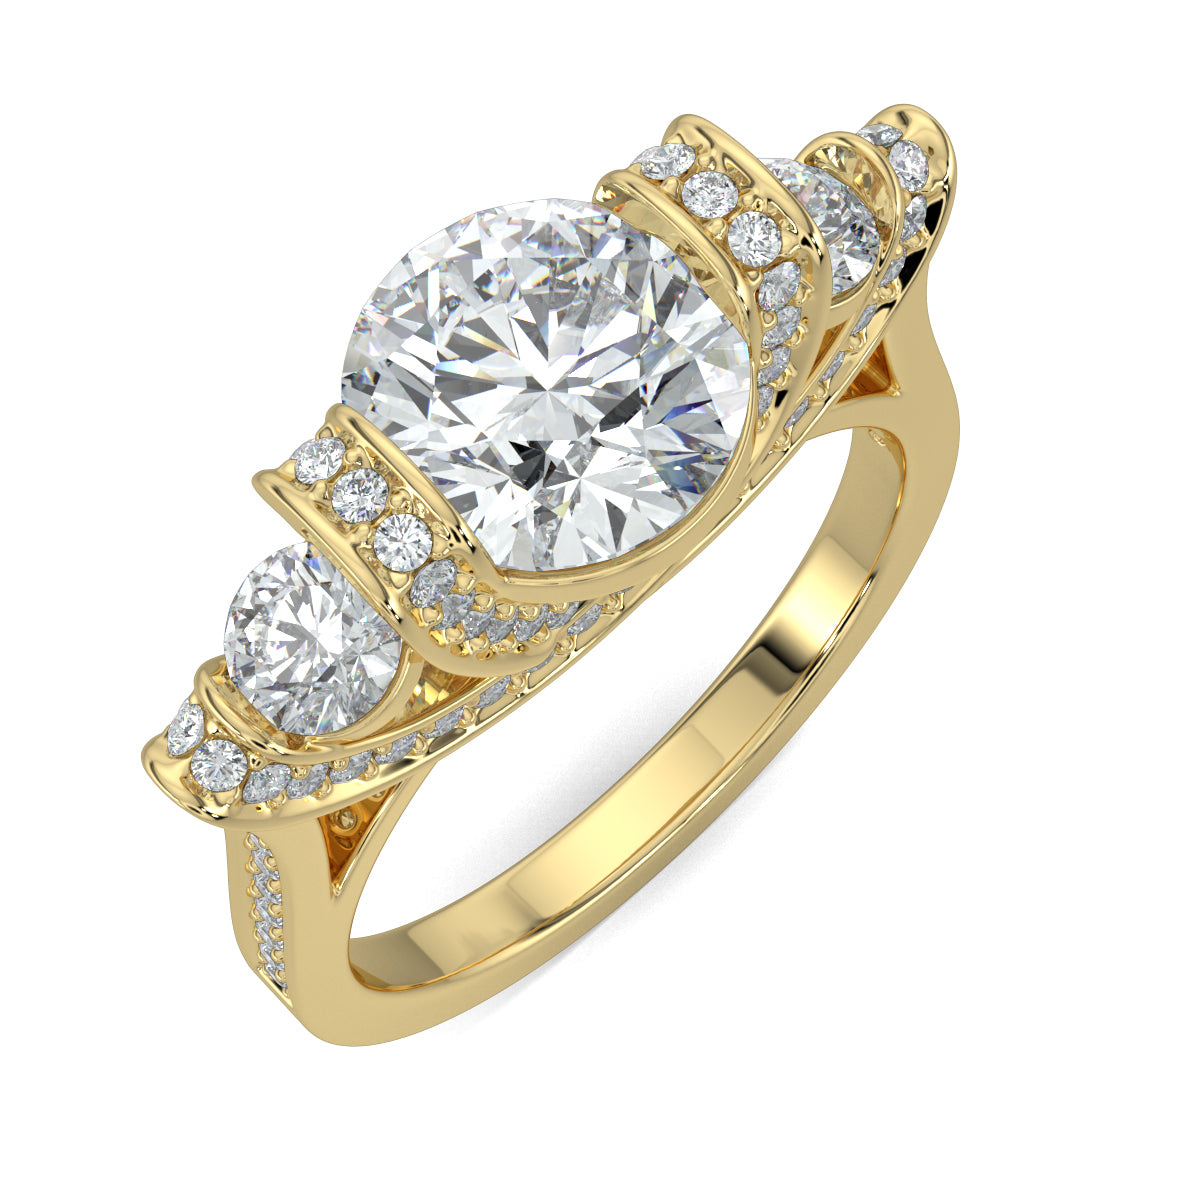 Yellow Gold, Diamond Ring, Enigma solitaire ring, natural diamonds, lab-grown diamonds, trellis band, round diamonds, elegant jewelry